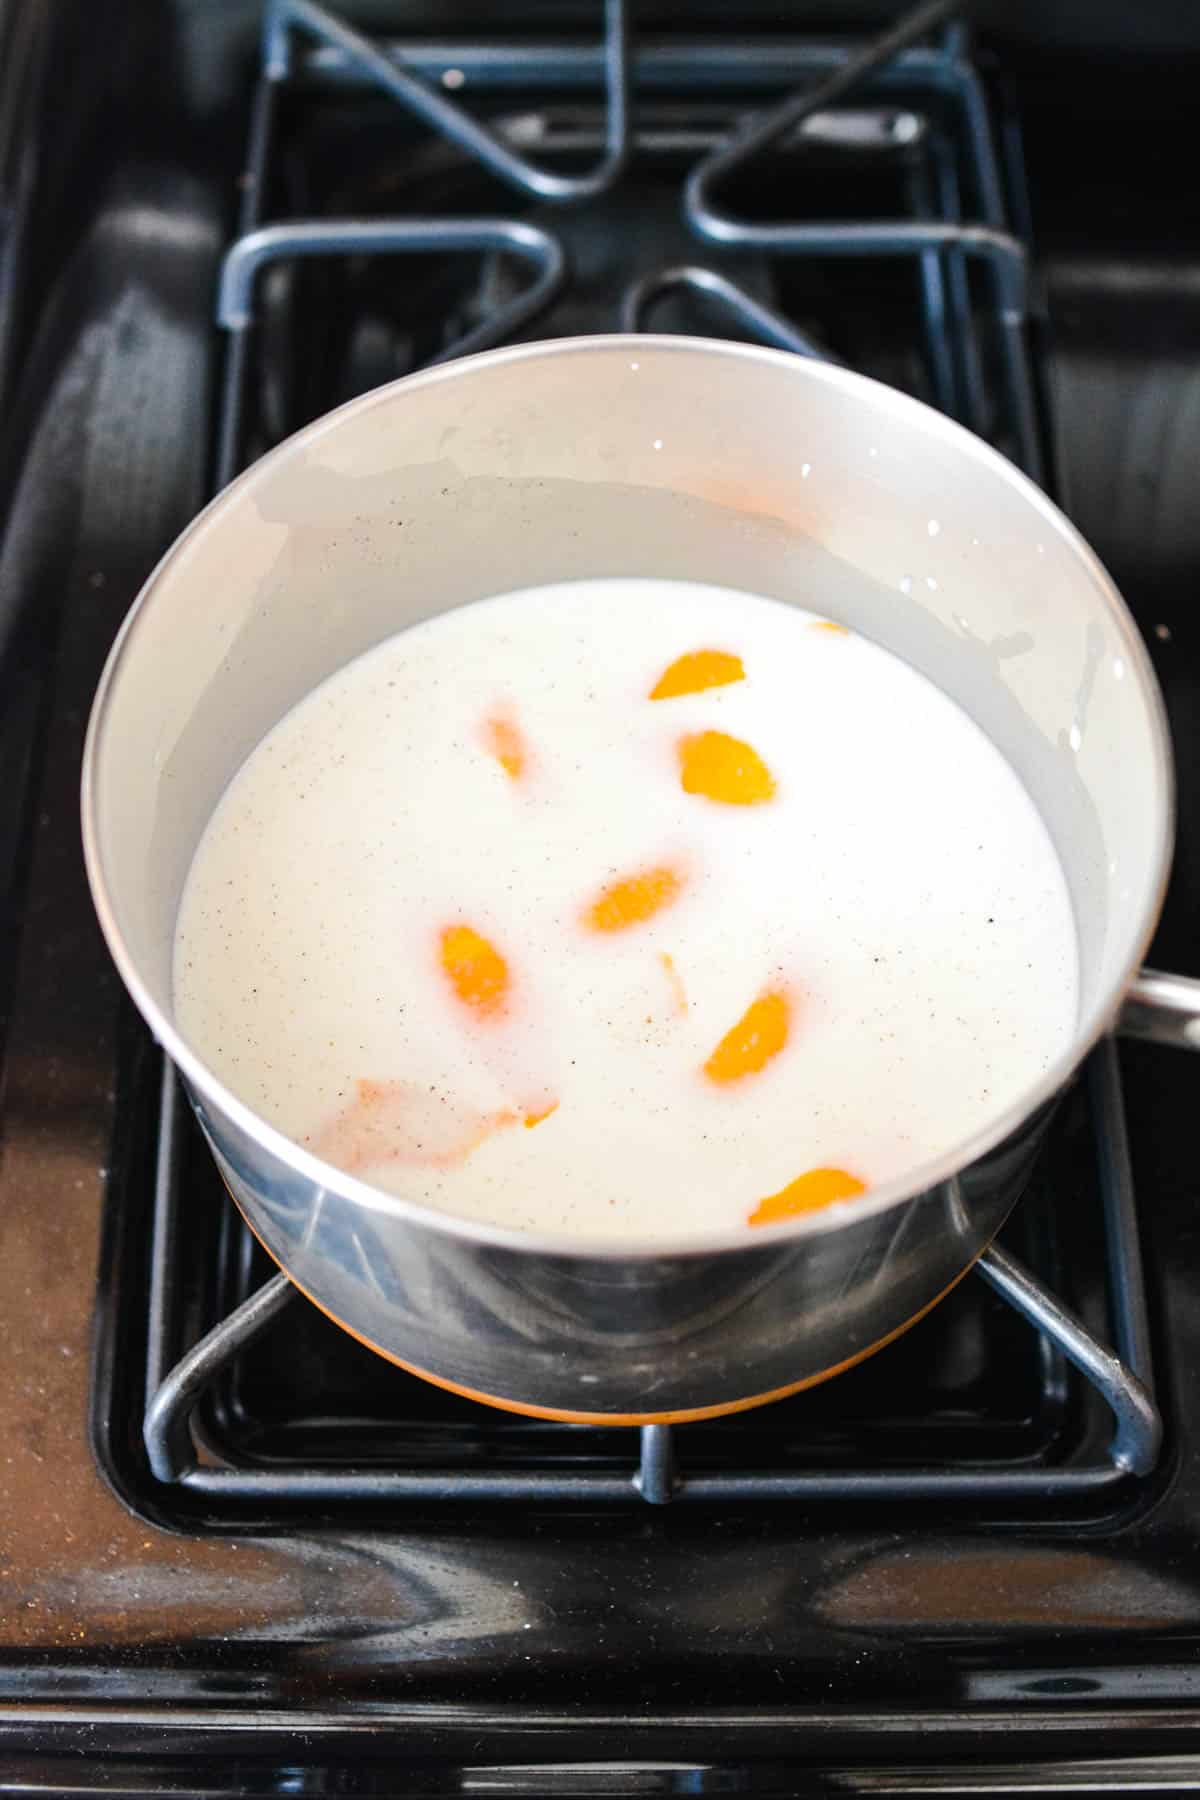 Saucepan of milk on the stove with orange peels in it.